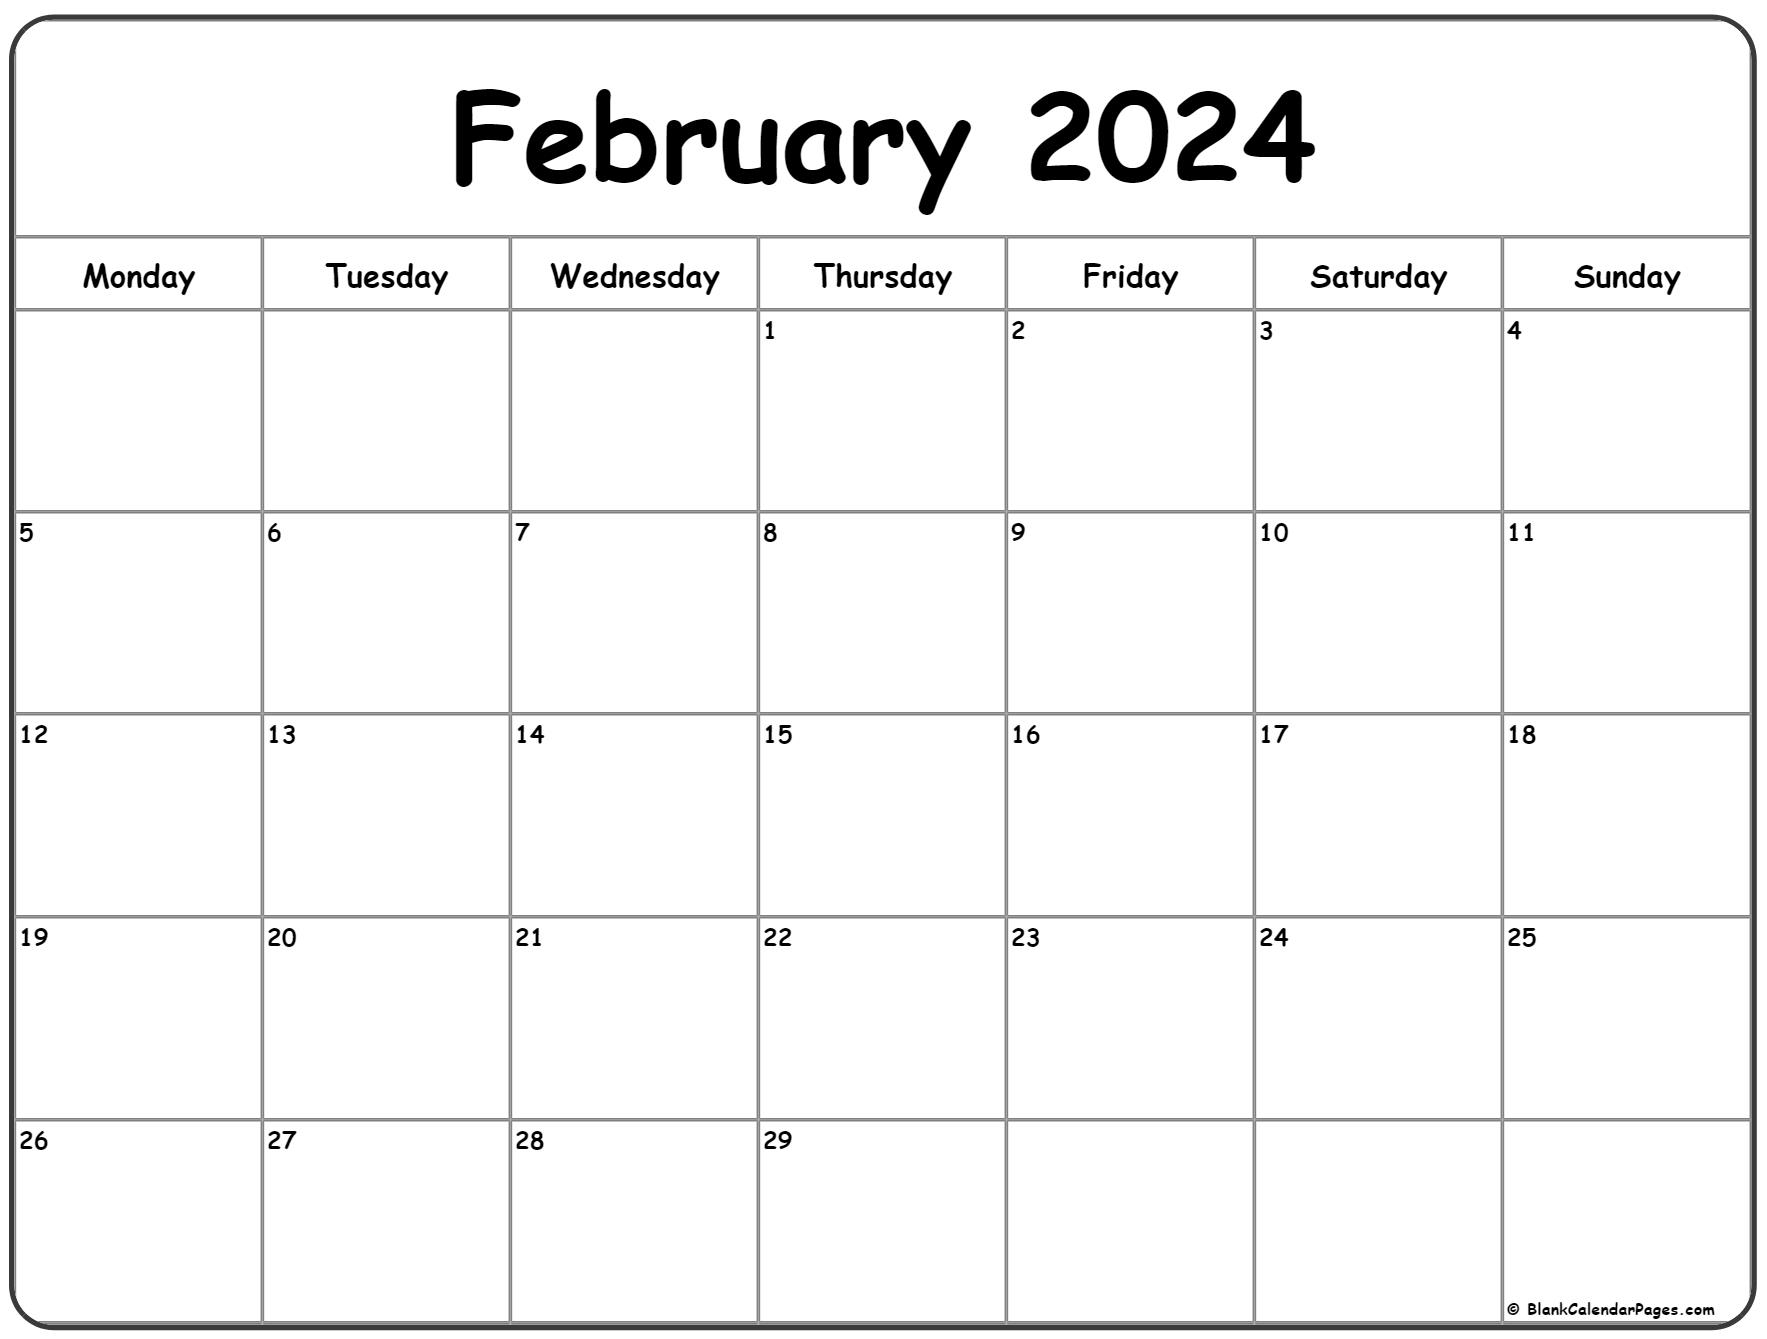 February 2024 Monday Calendar | Monday To Sunday for February 2024 Calendar Page Printable